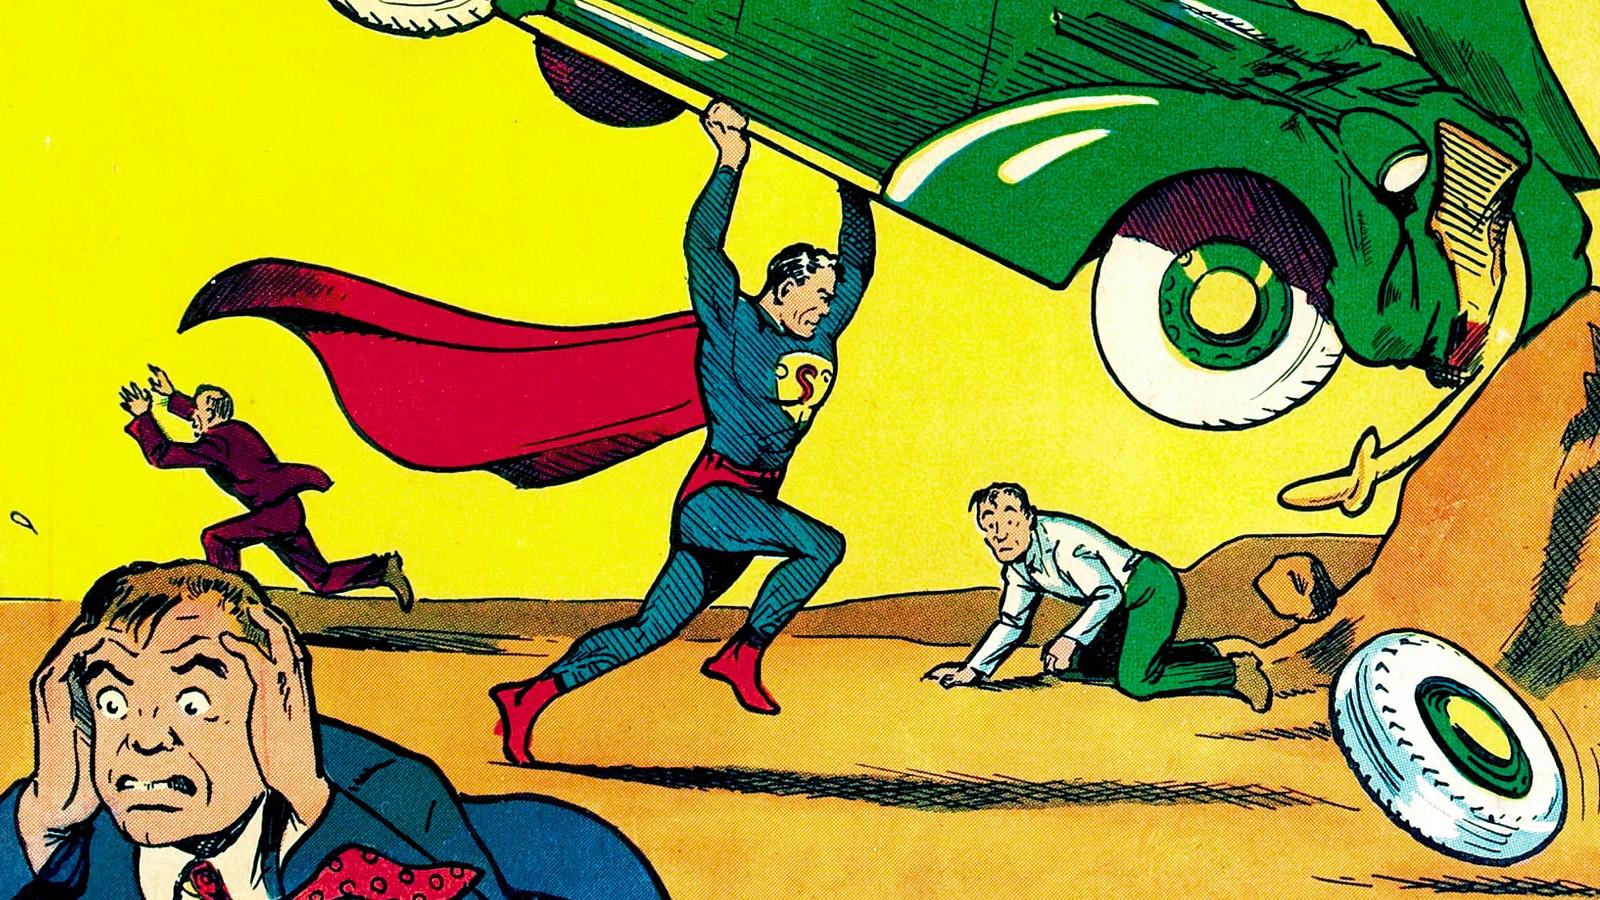 Action Comics #1 cover art